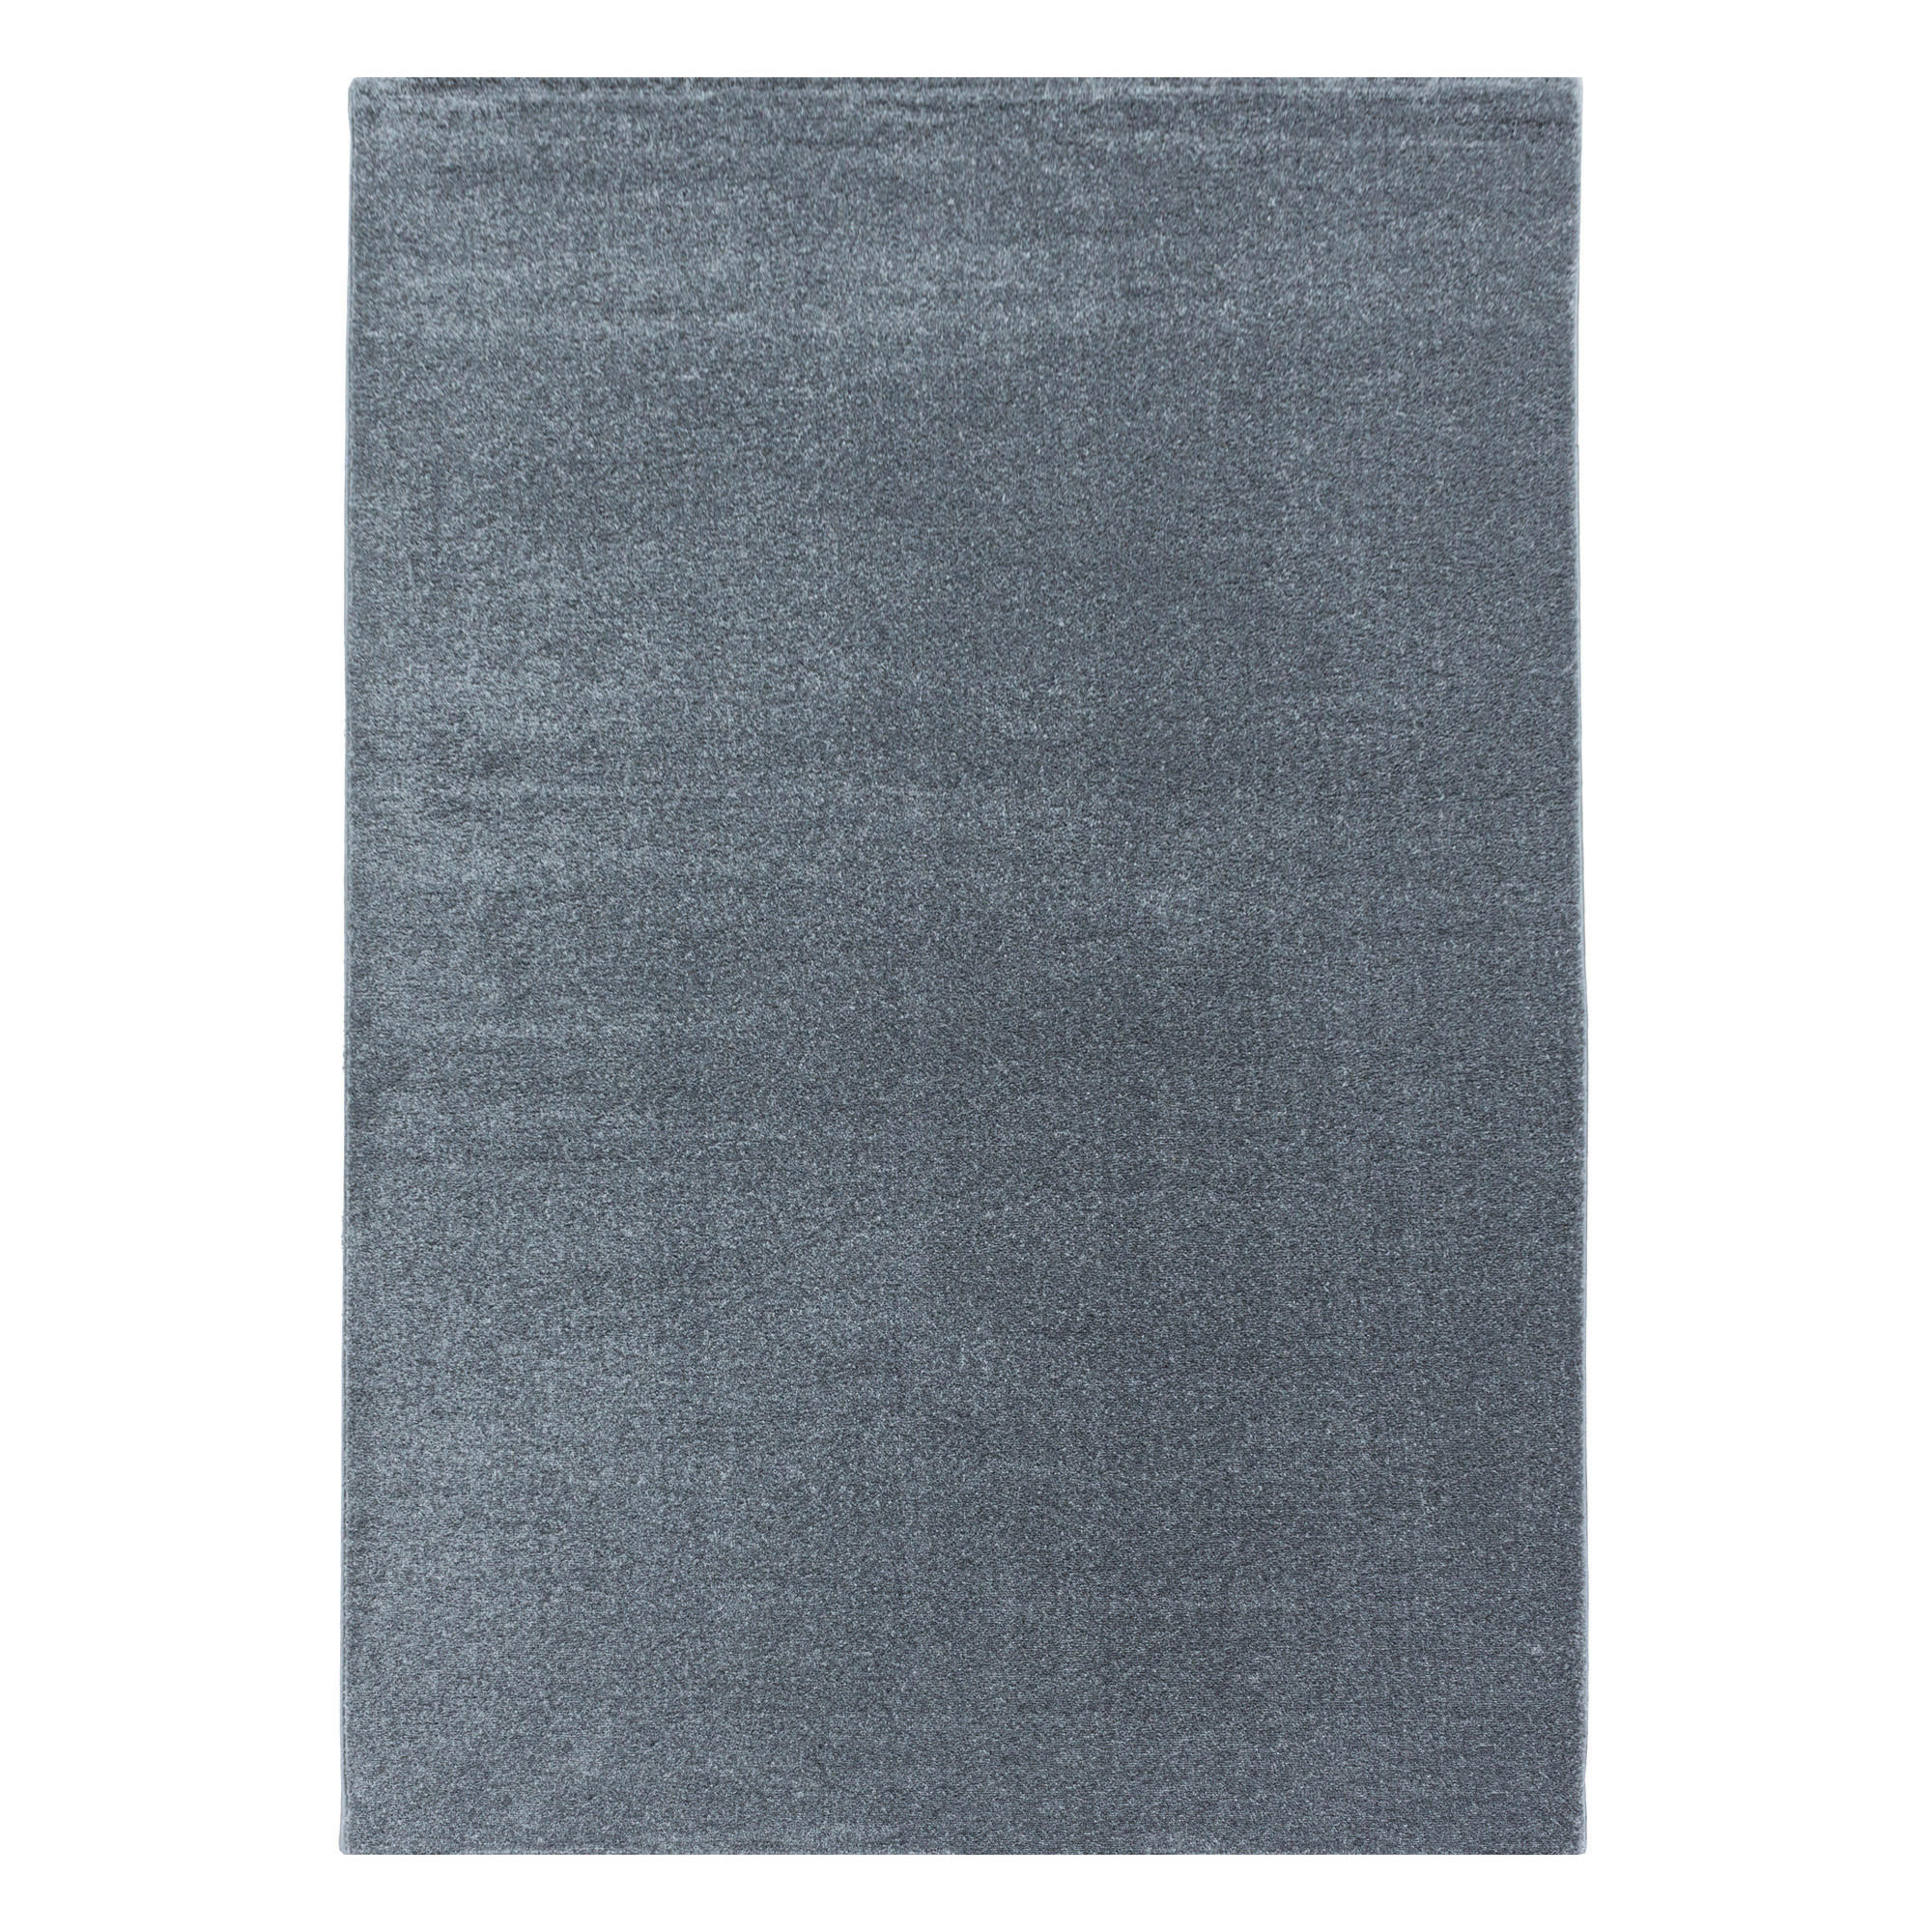 HOCHFLORTEPPICH  80/150 cm  gewebt  Silberfarben   - Silberfarben, Basics, Textil (80/150cm) - Novel